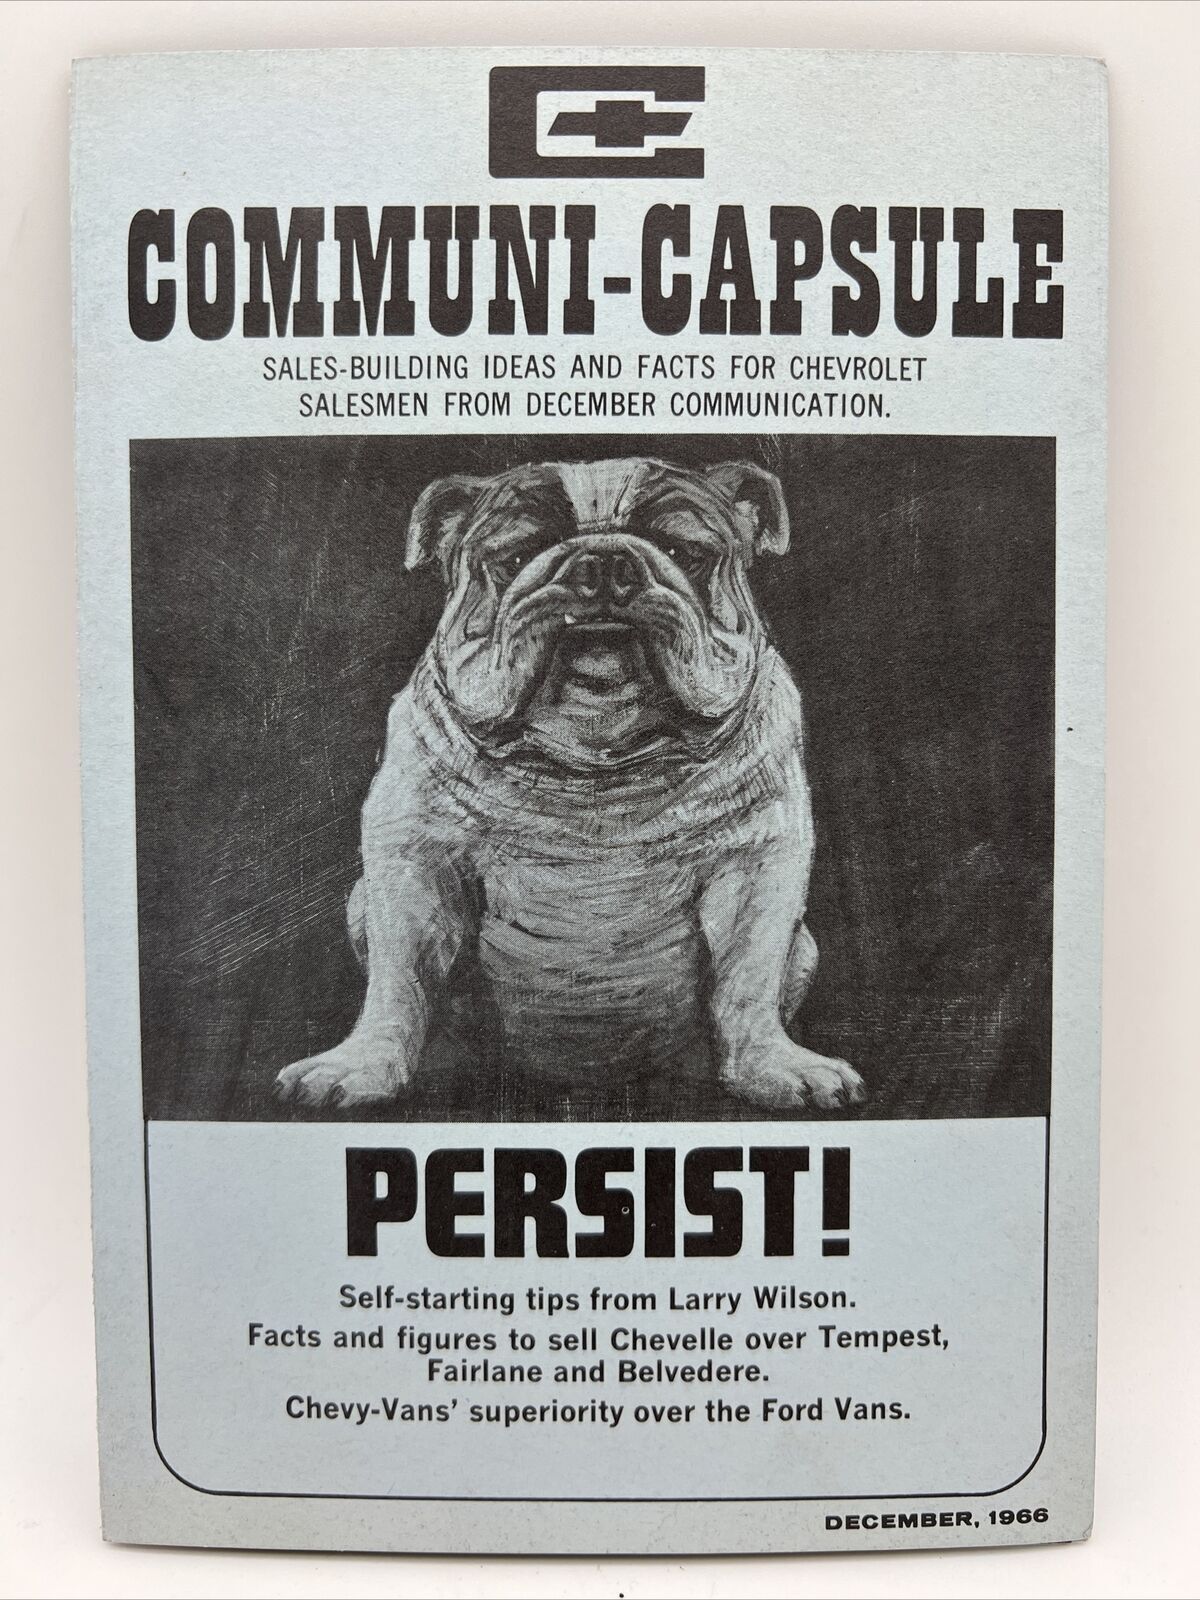 1966 CHEVROLET COMMUNI-CAPSULE Persist Dealer Sales Tips from Larry Wilson